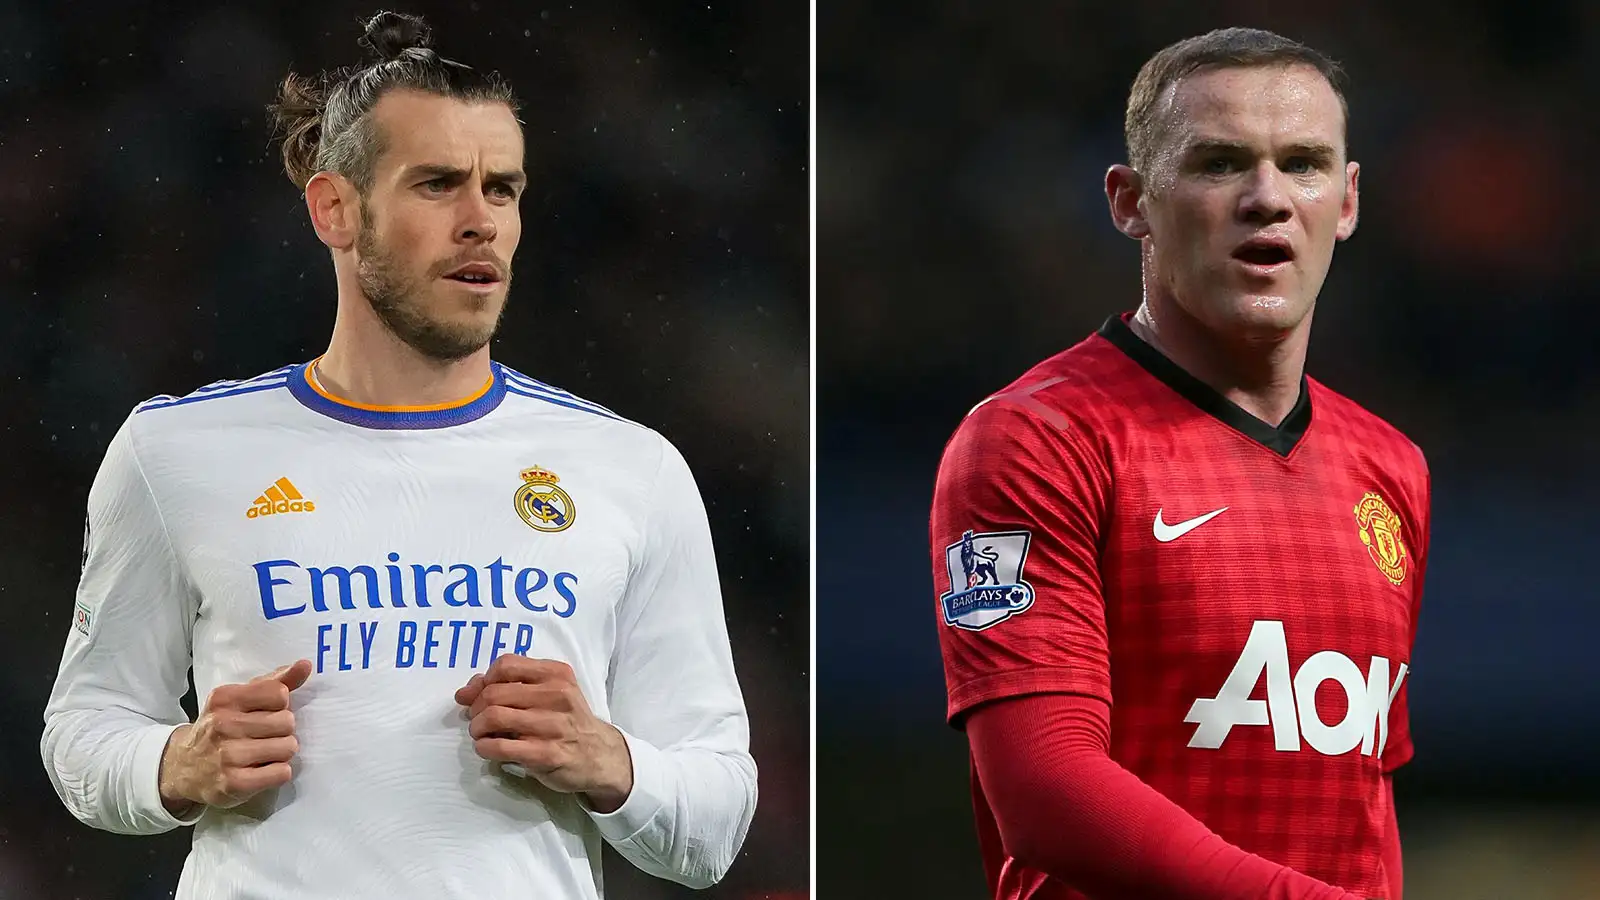 Greatest British player? Comparing Gareth Bale & Wayne Rooney’s career records